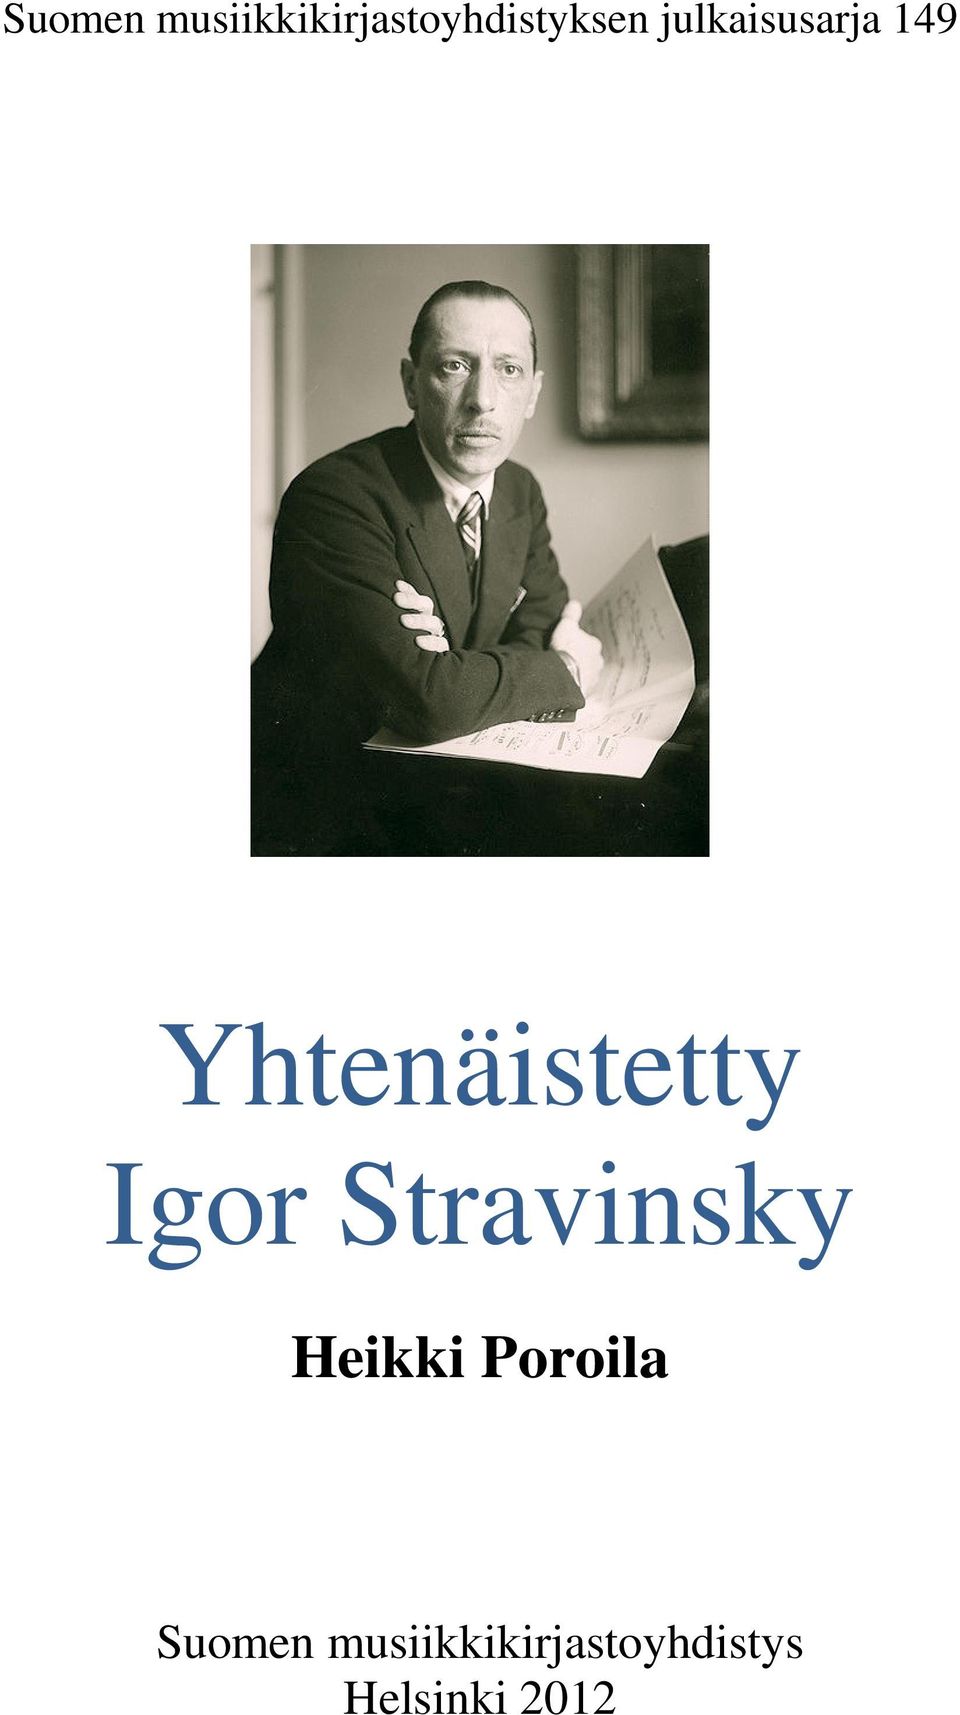 Igor Stravinsky Heikki Poroila